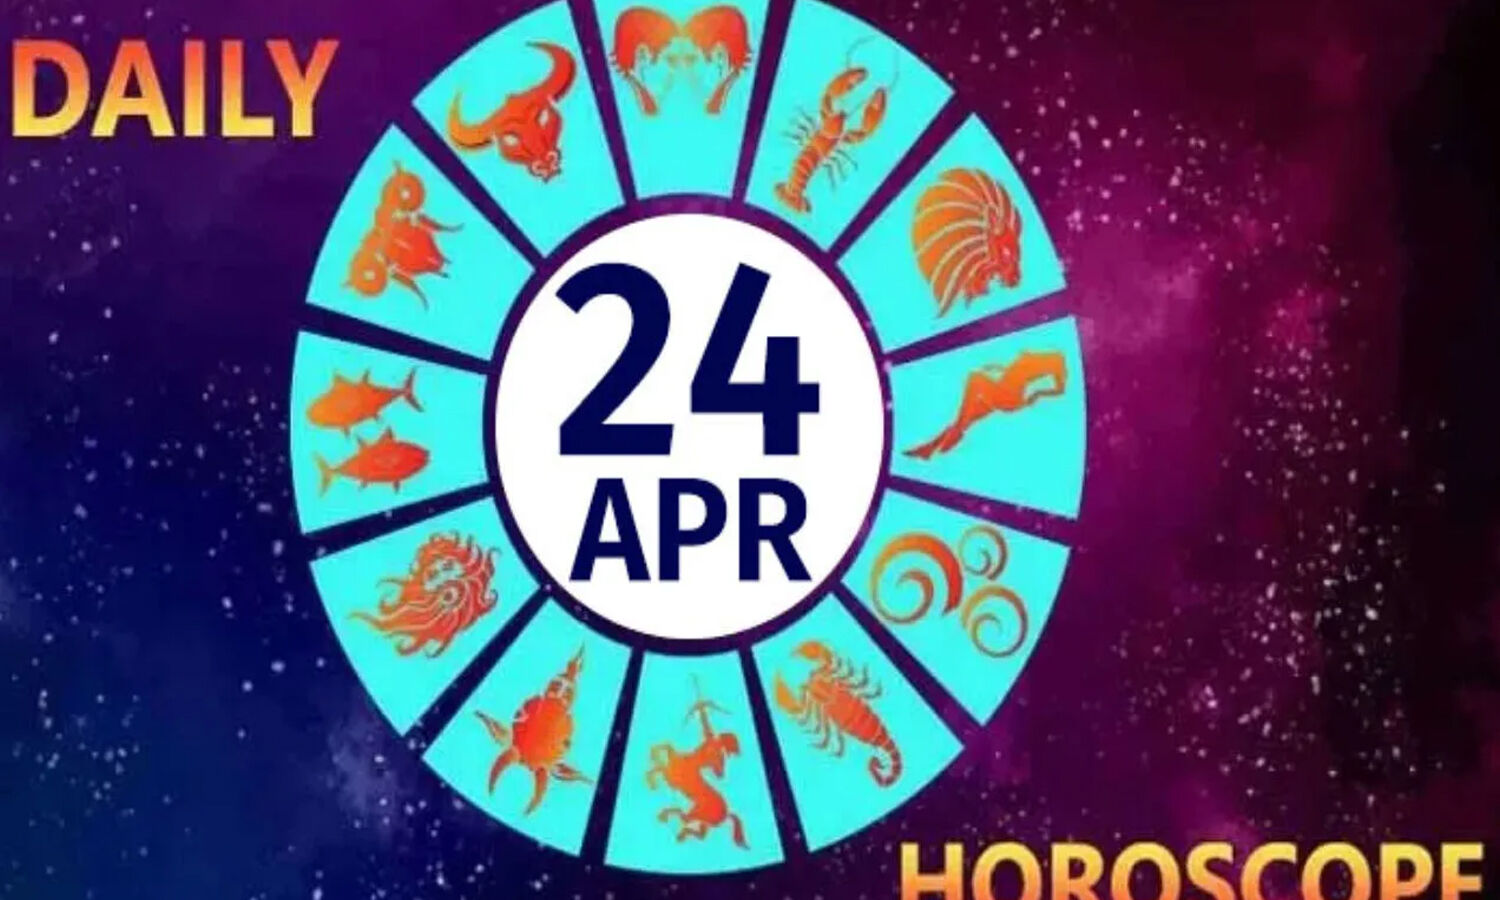 APRIL 24 నేటి పంచాగం, ద్వాదశ రాశుల దినఫలాలు April 24th horoscope